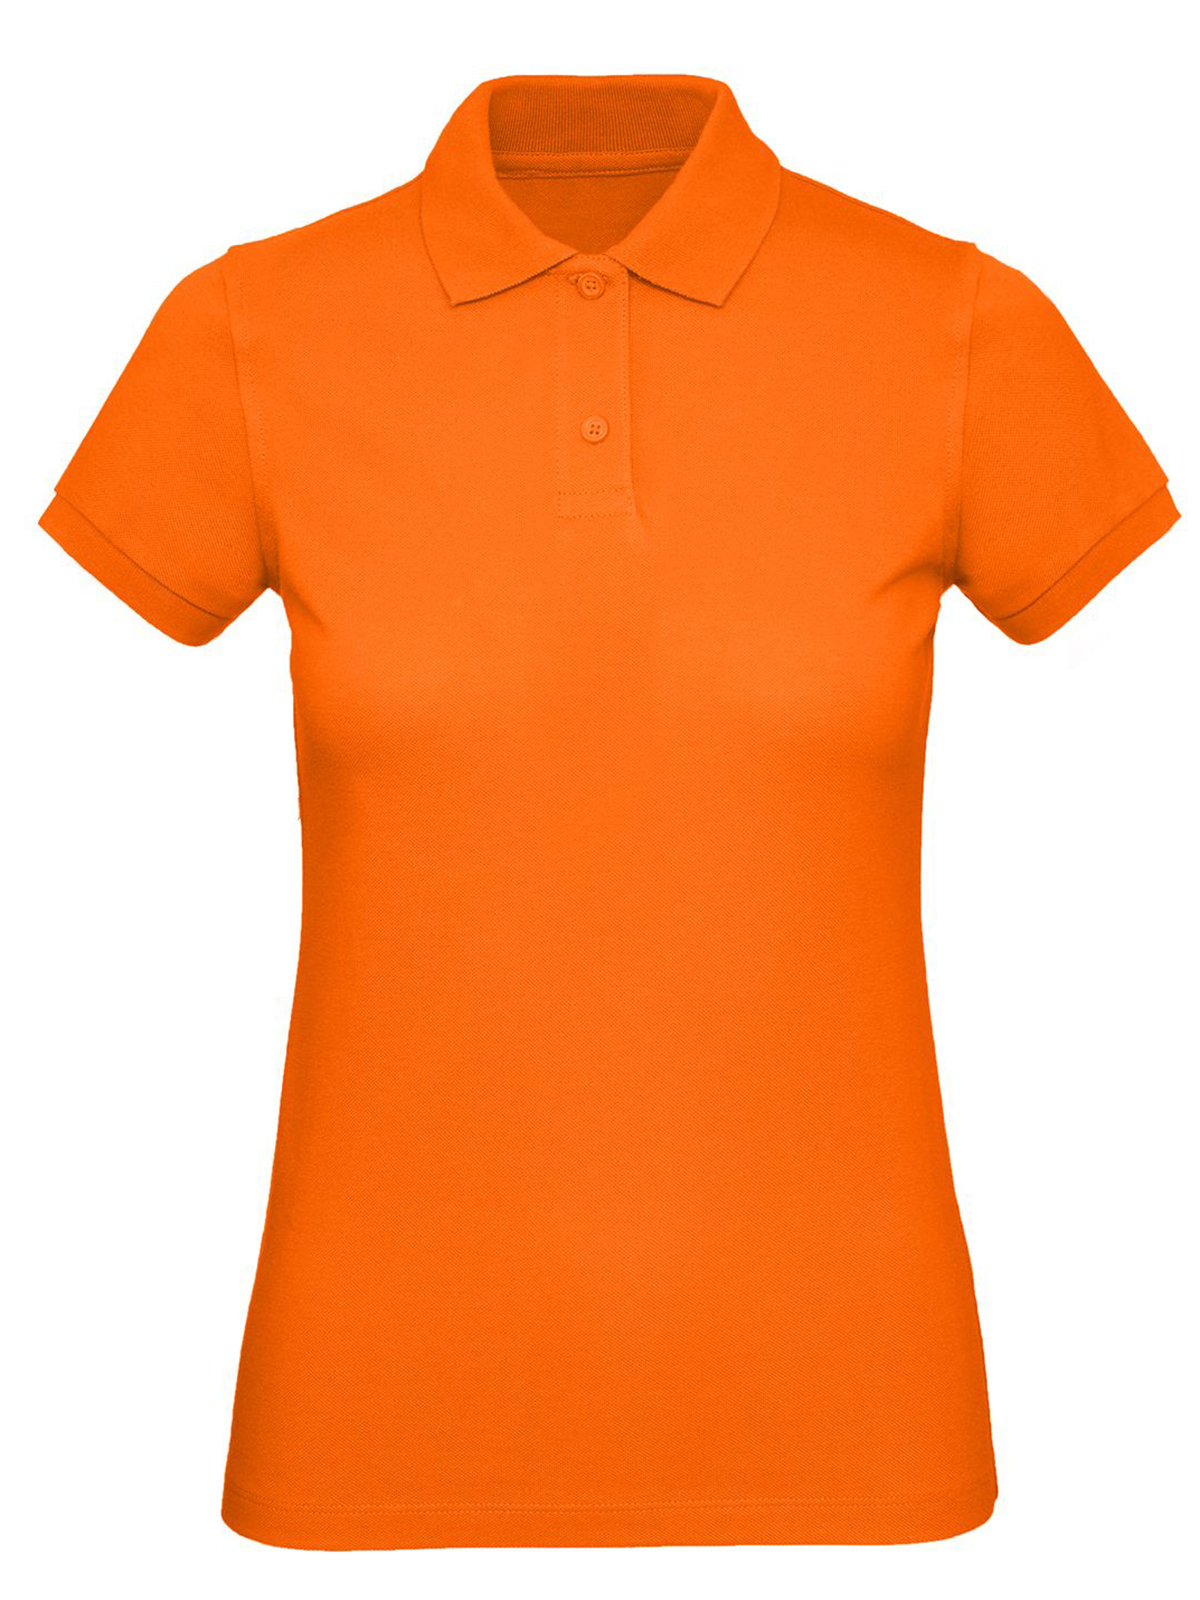 inspire-polo-women-orange.webp